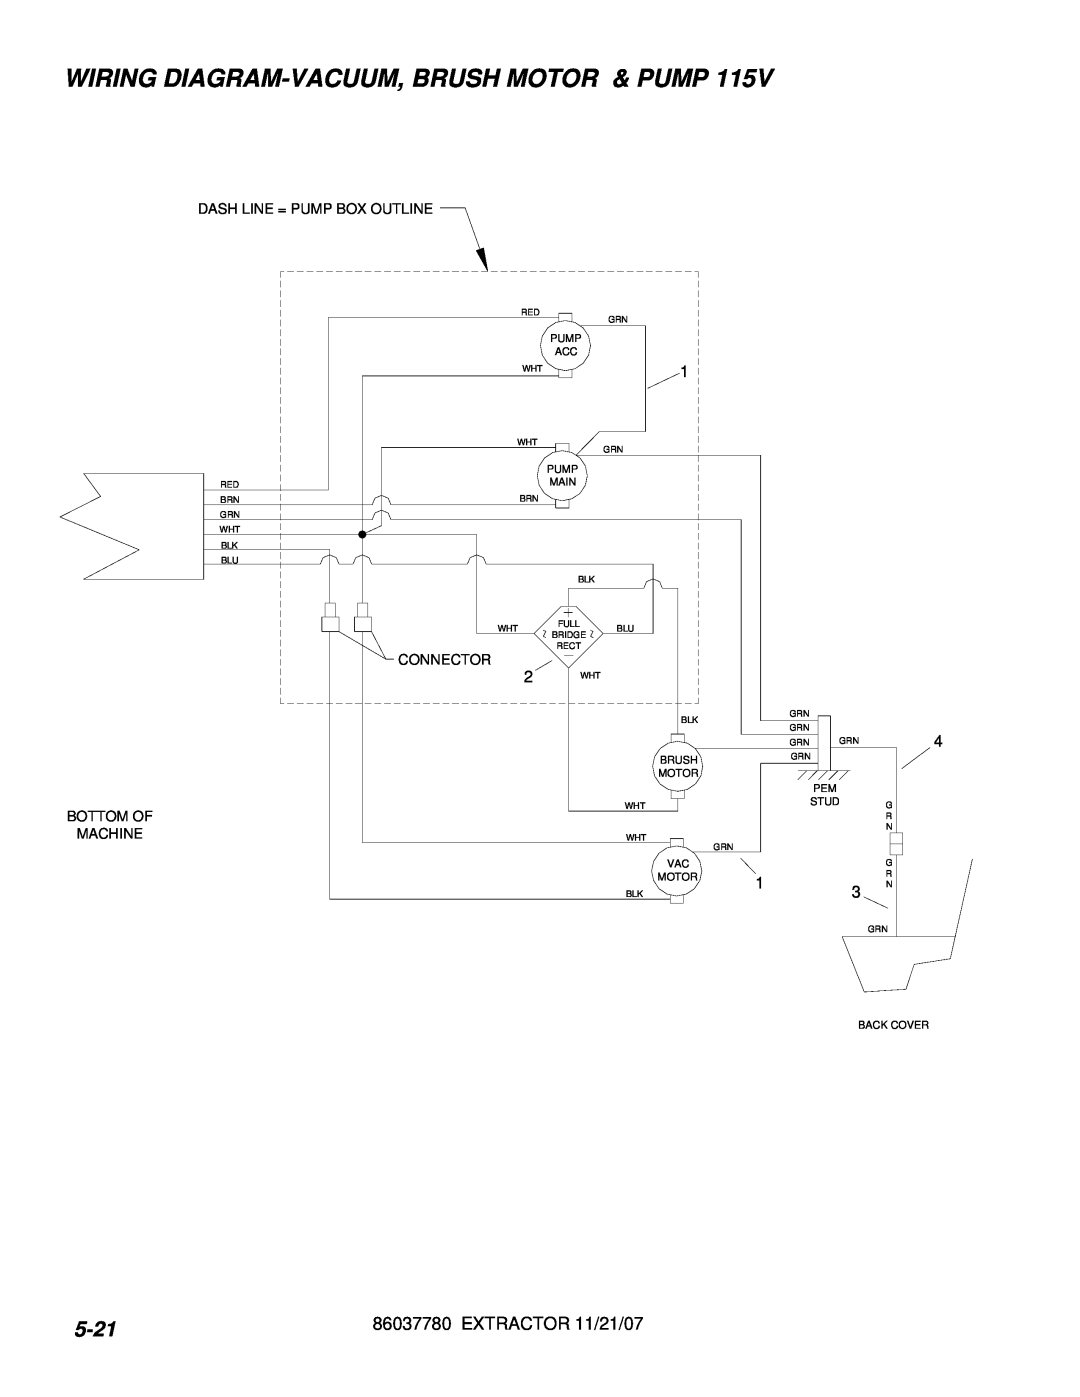 Windsor MPRO AU 10080420 Wiring Diagram-Vacuum,Brush Motor & Pump, 5-21, Dash Line = Pump Box Outline, Connector, Machine 